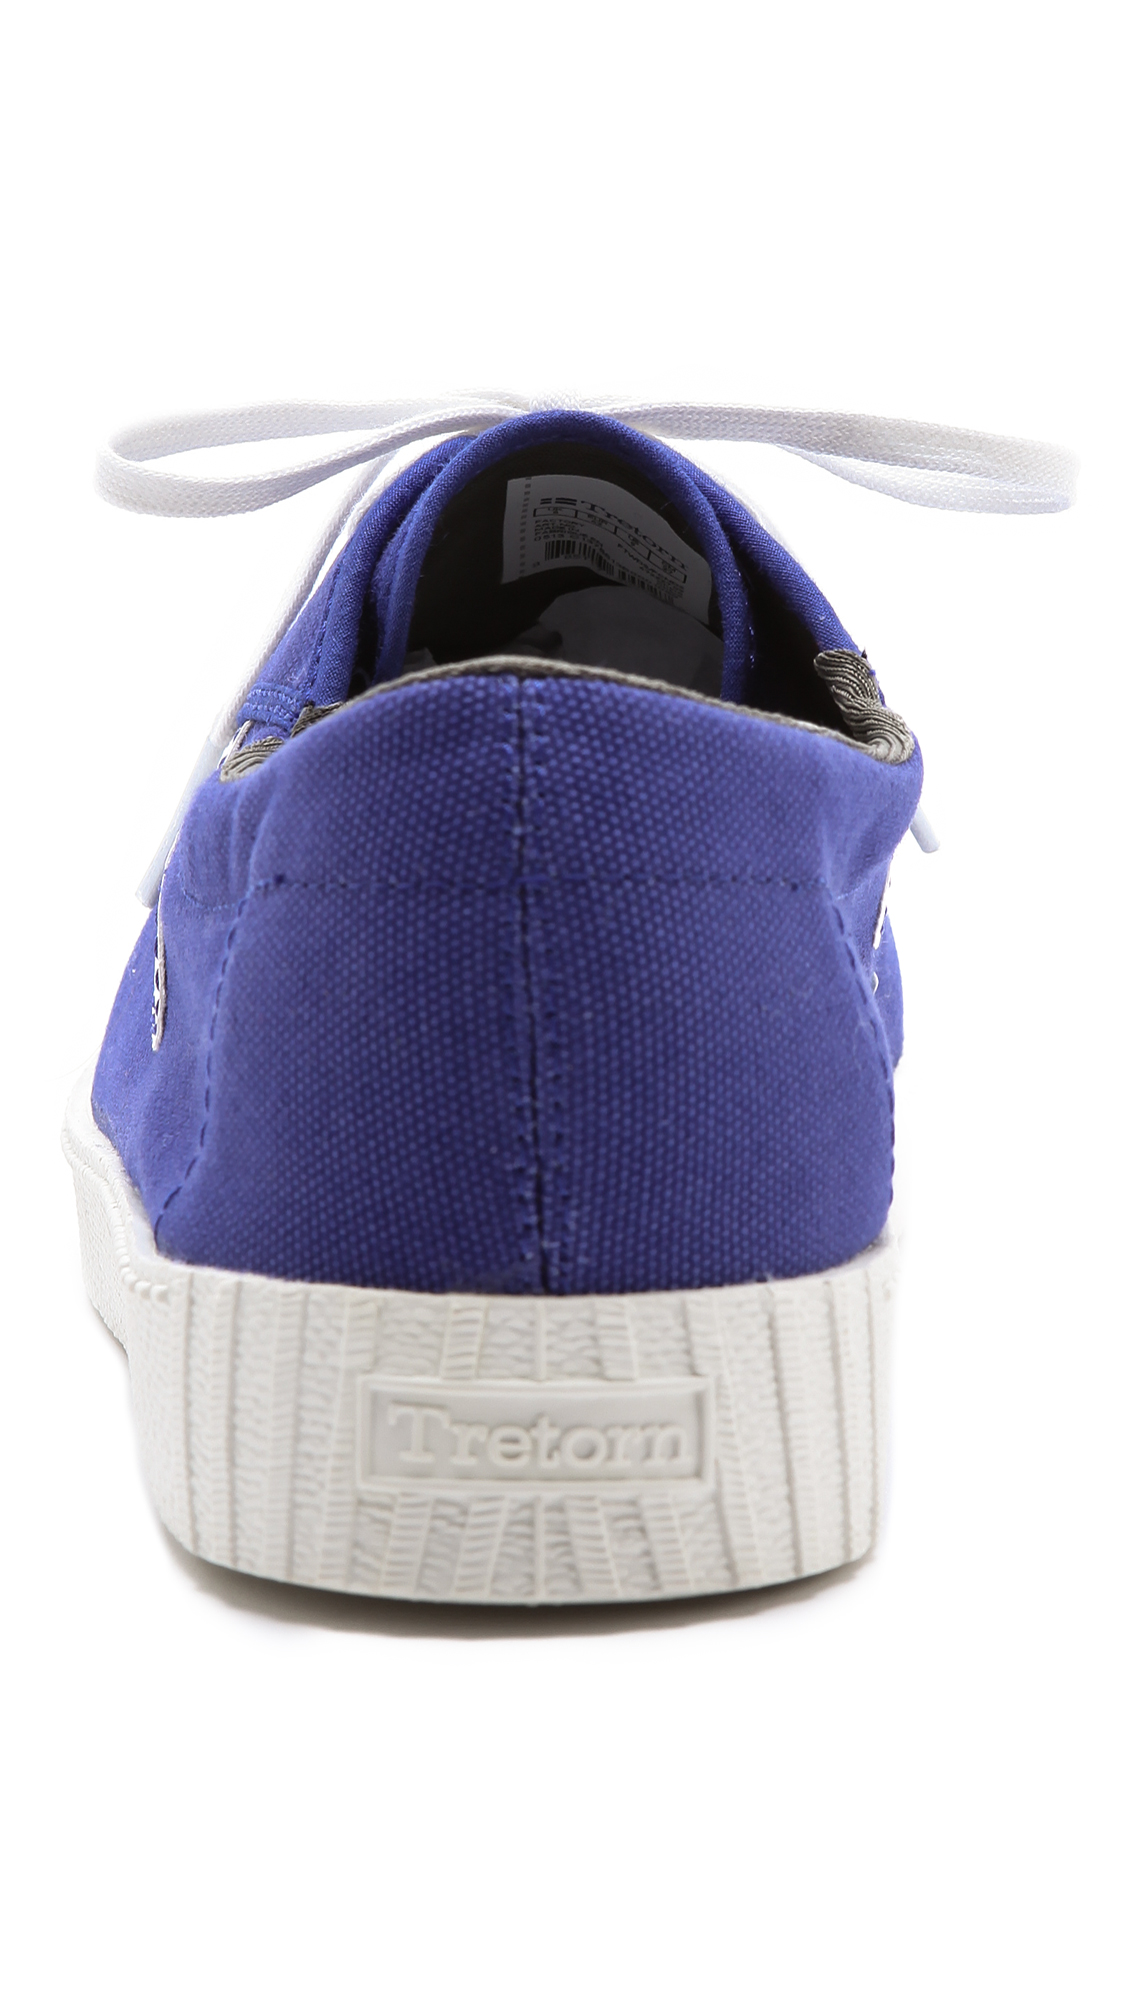 Tretorn Nylite Canvas Sneakers in Deep Ultramarine/White (Blue) for Men ...